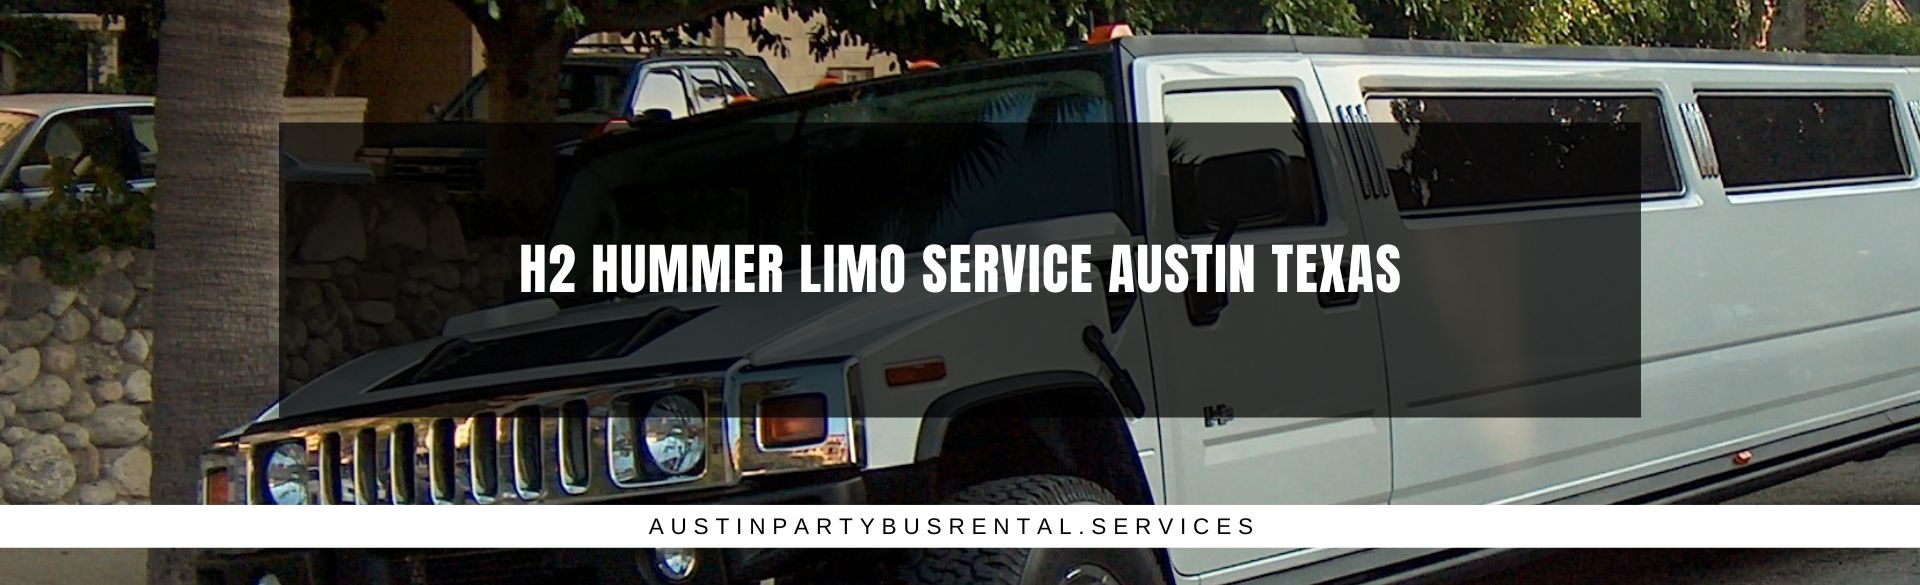 H2 Hummer Limo Service Austin Texas